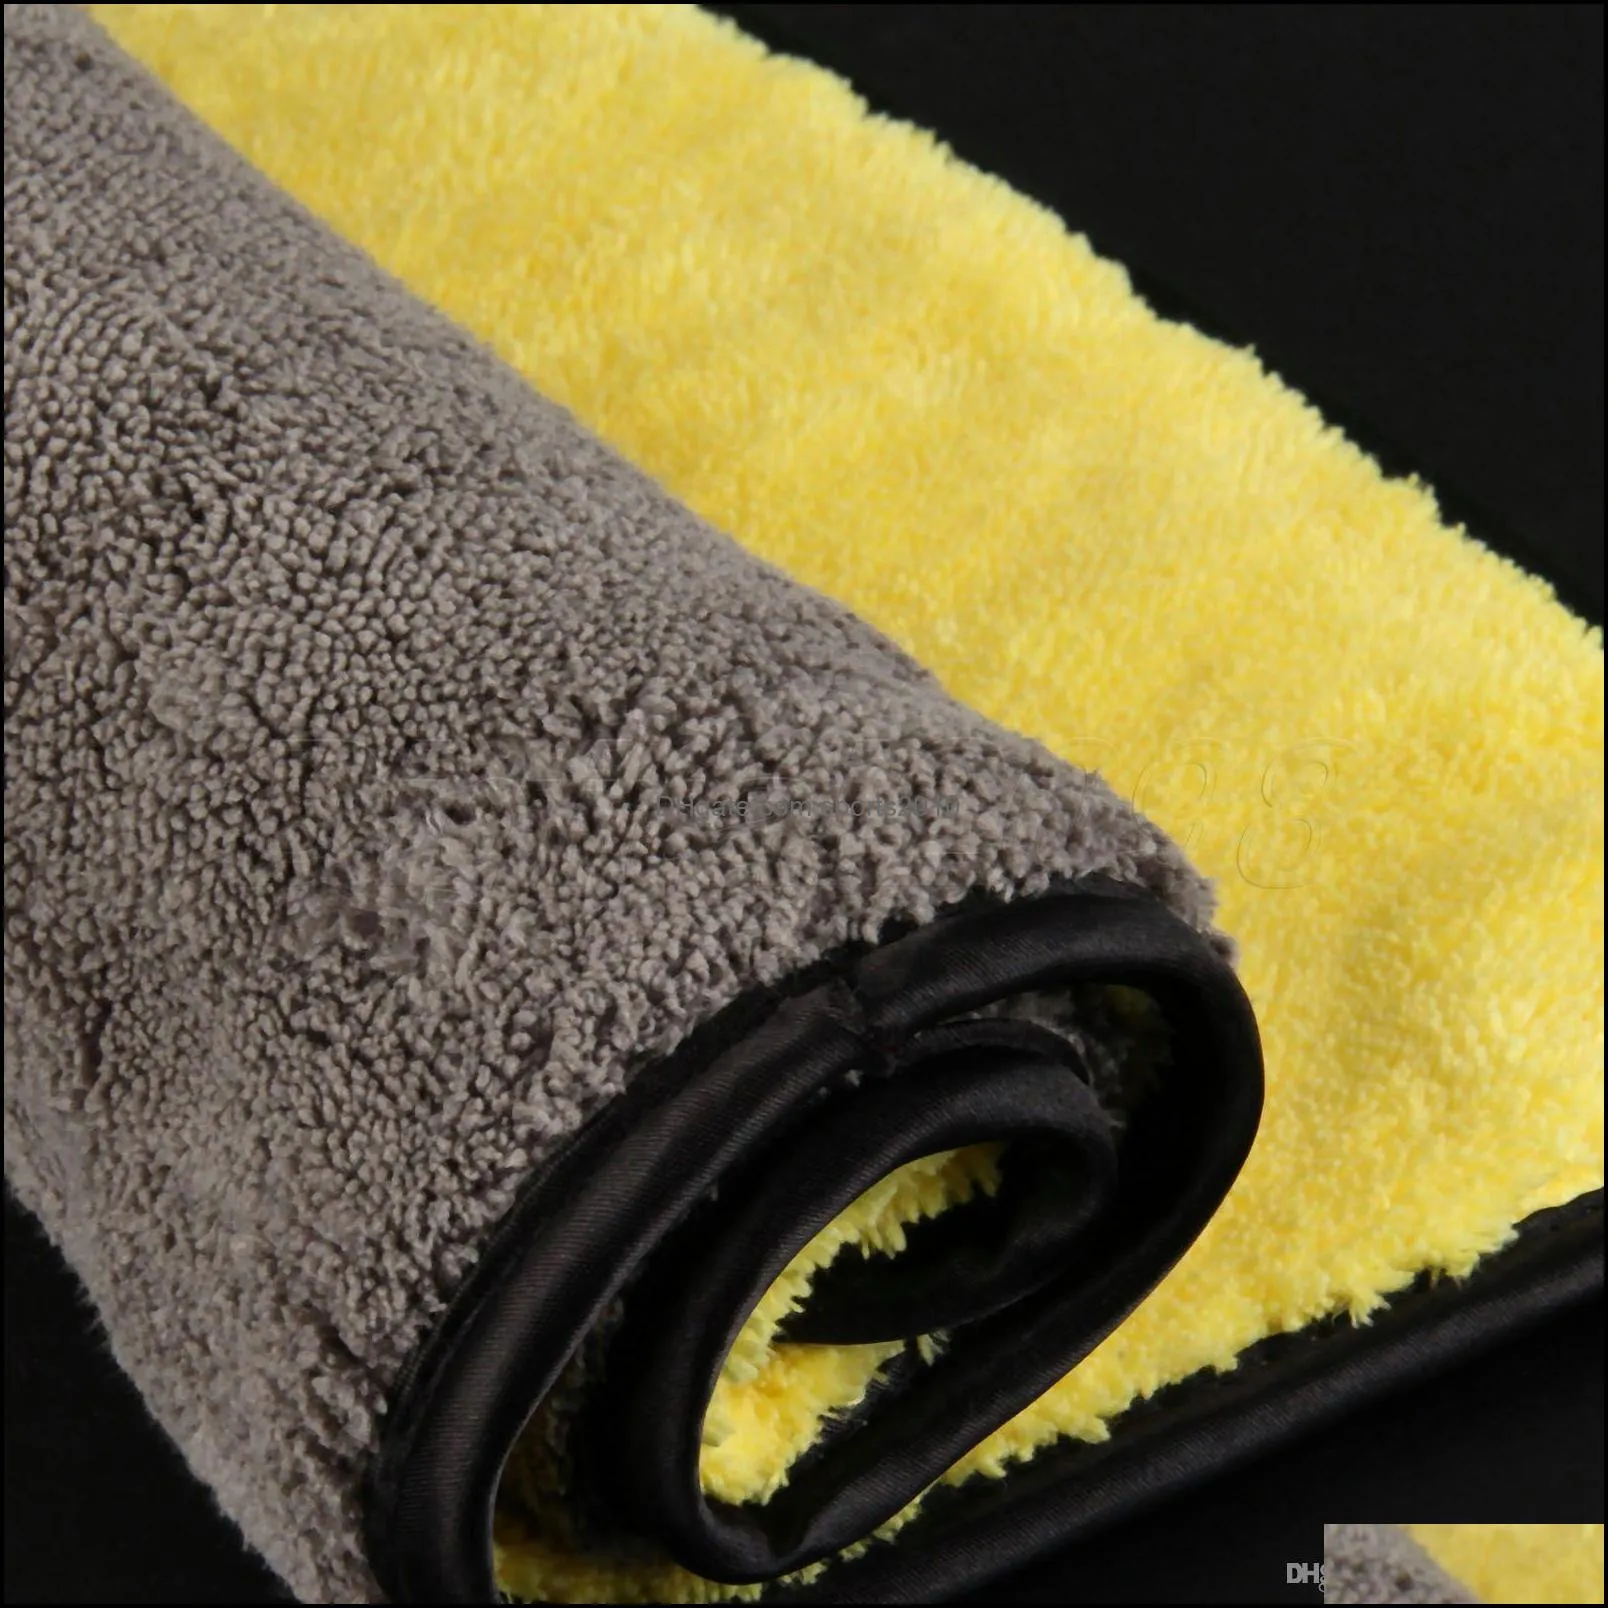 45cm x 38cm 800gsm durable super thick plush microfiber car cleaning cloths car care microfibre wax polishing detailing towels